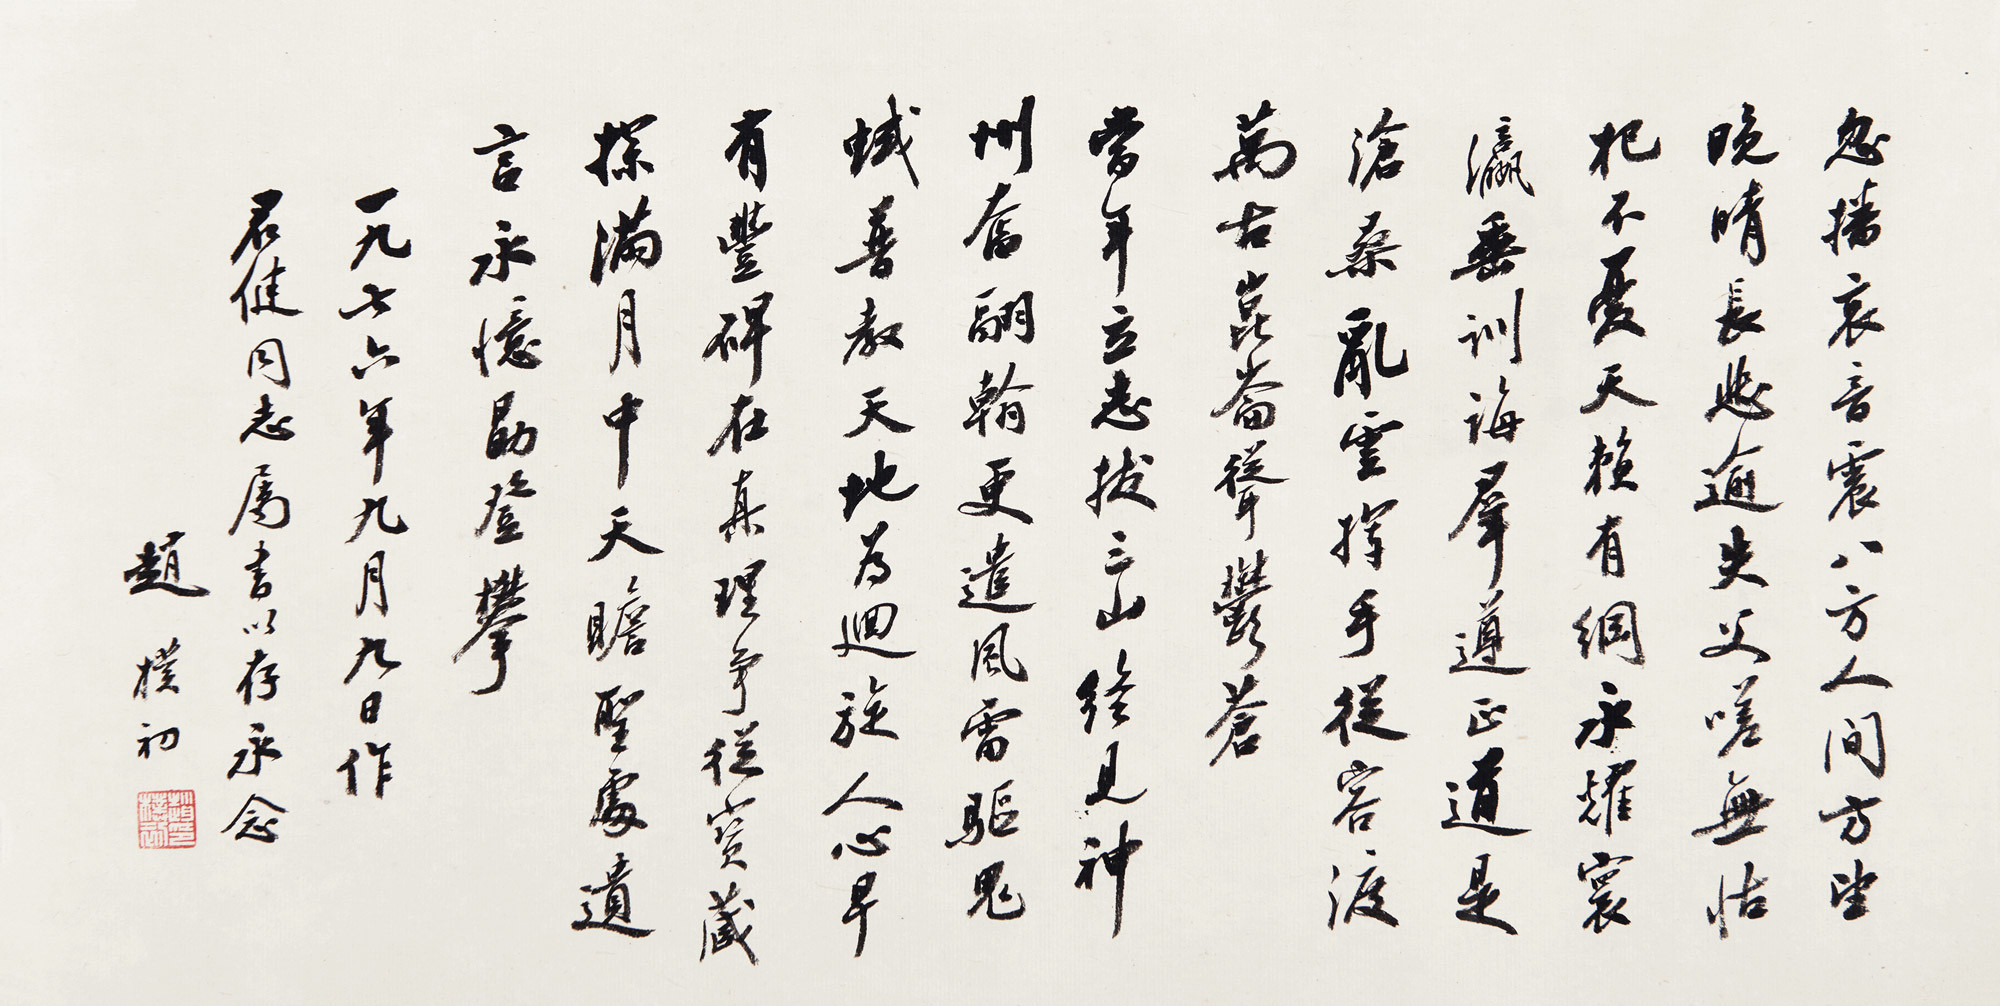 Seven - Characters Calligraphic Poem in Running Script